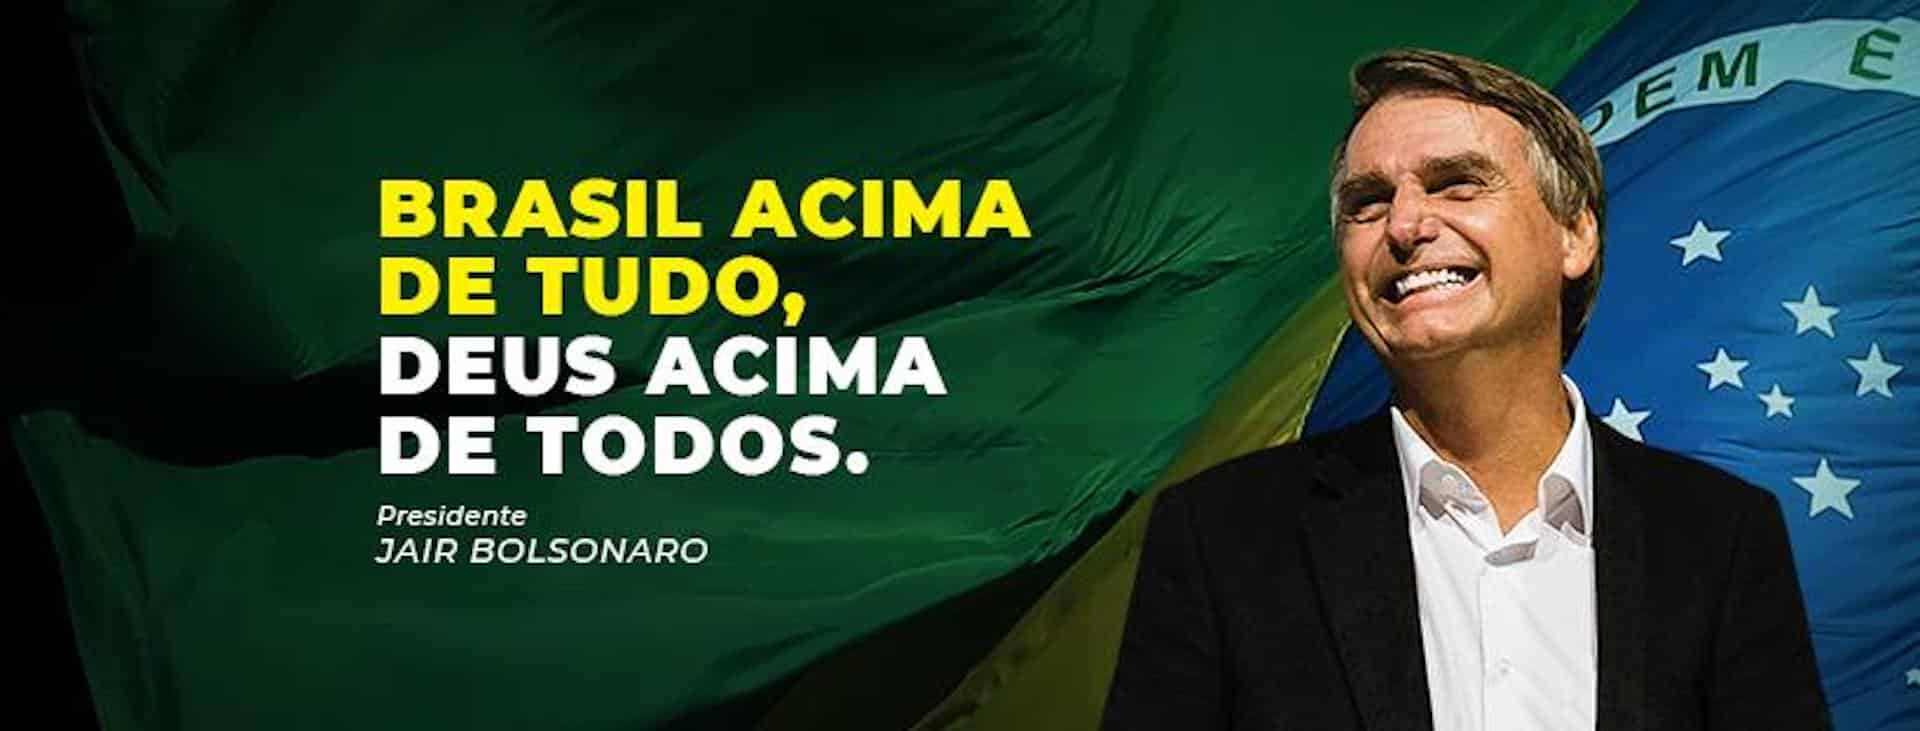 Facebook supprime les contenus de Bolsonaro.